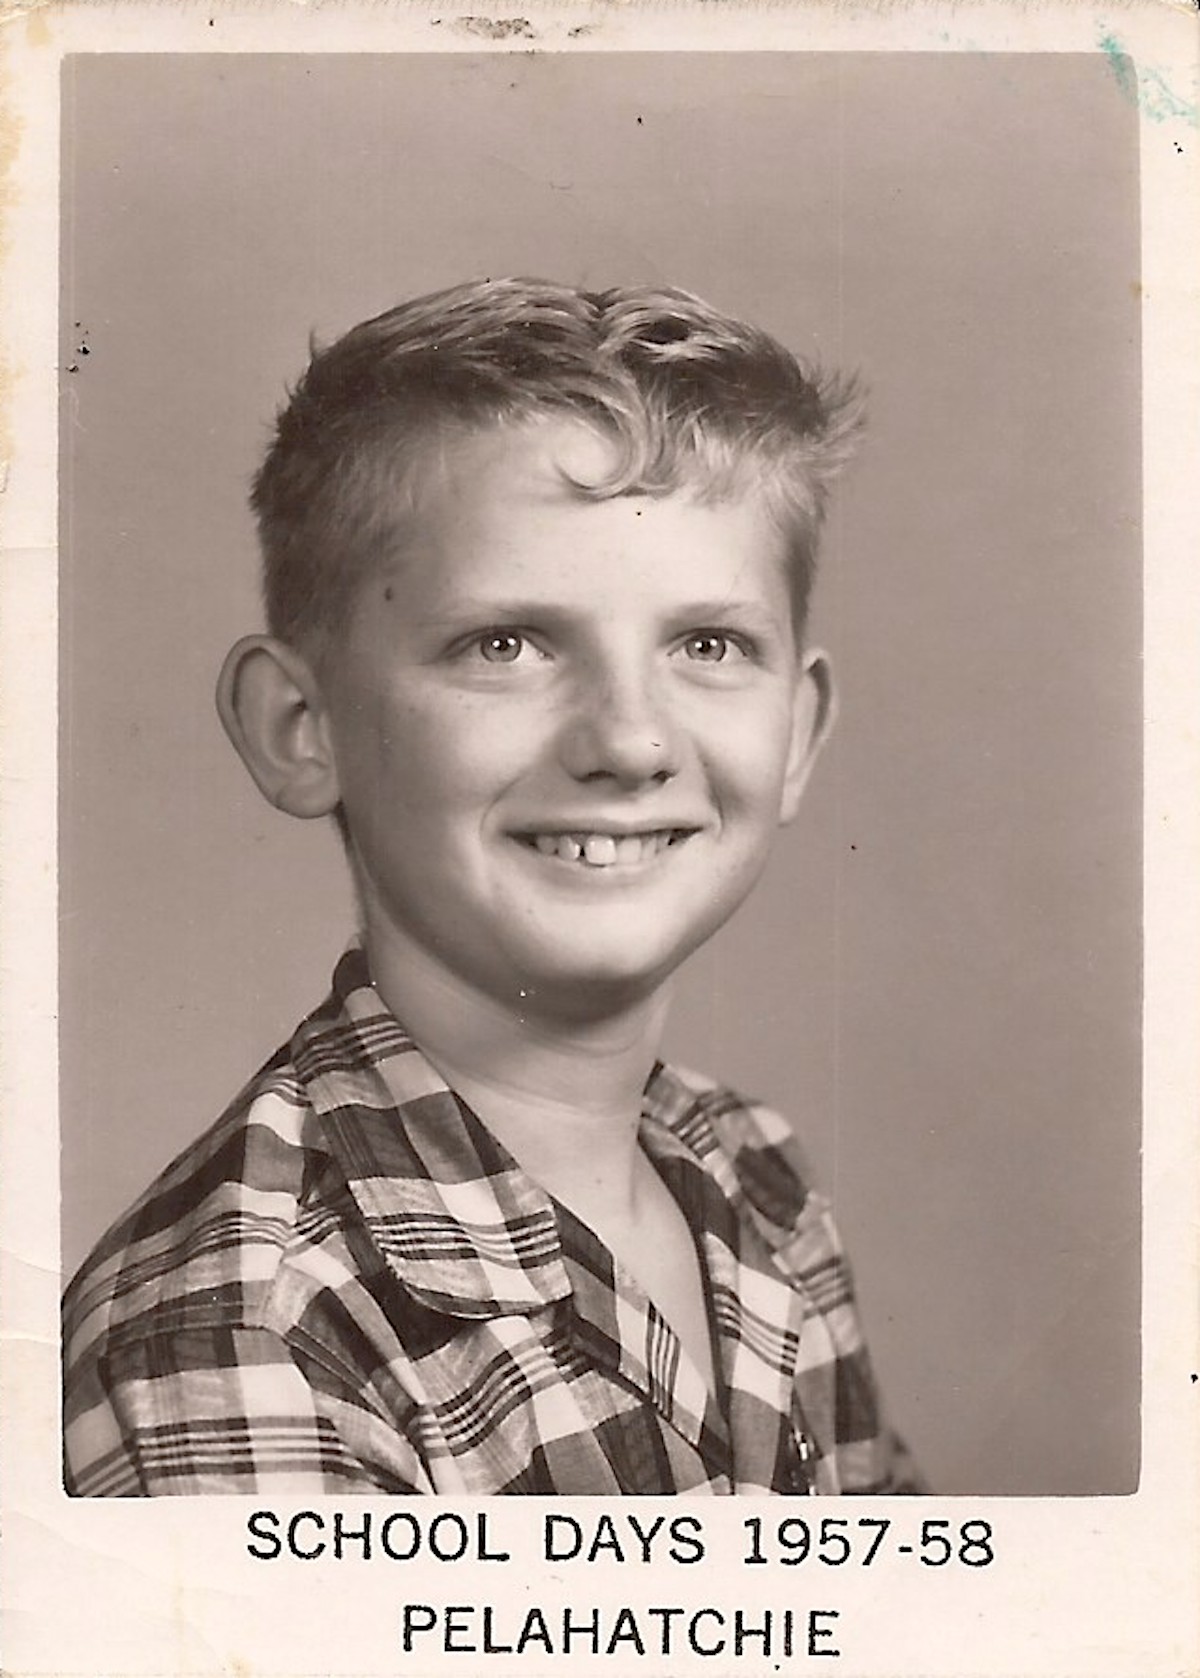 A grade school portrait of Jack, Pelahatchie, MS, 1957-1958. Photo courtesy of Jack Myers.